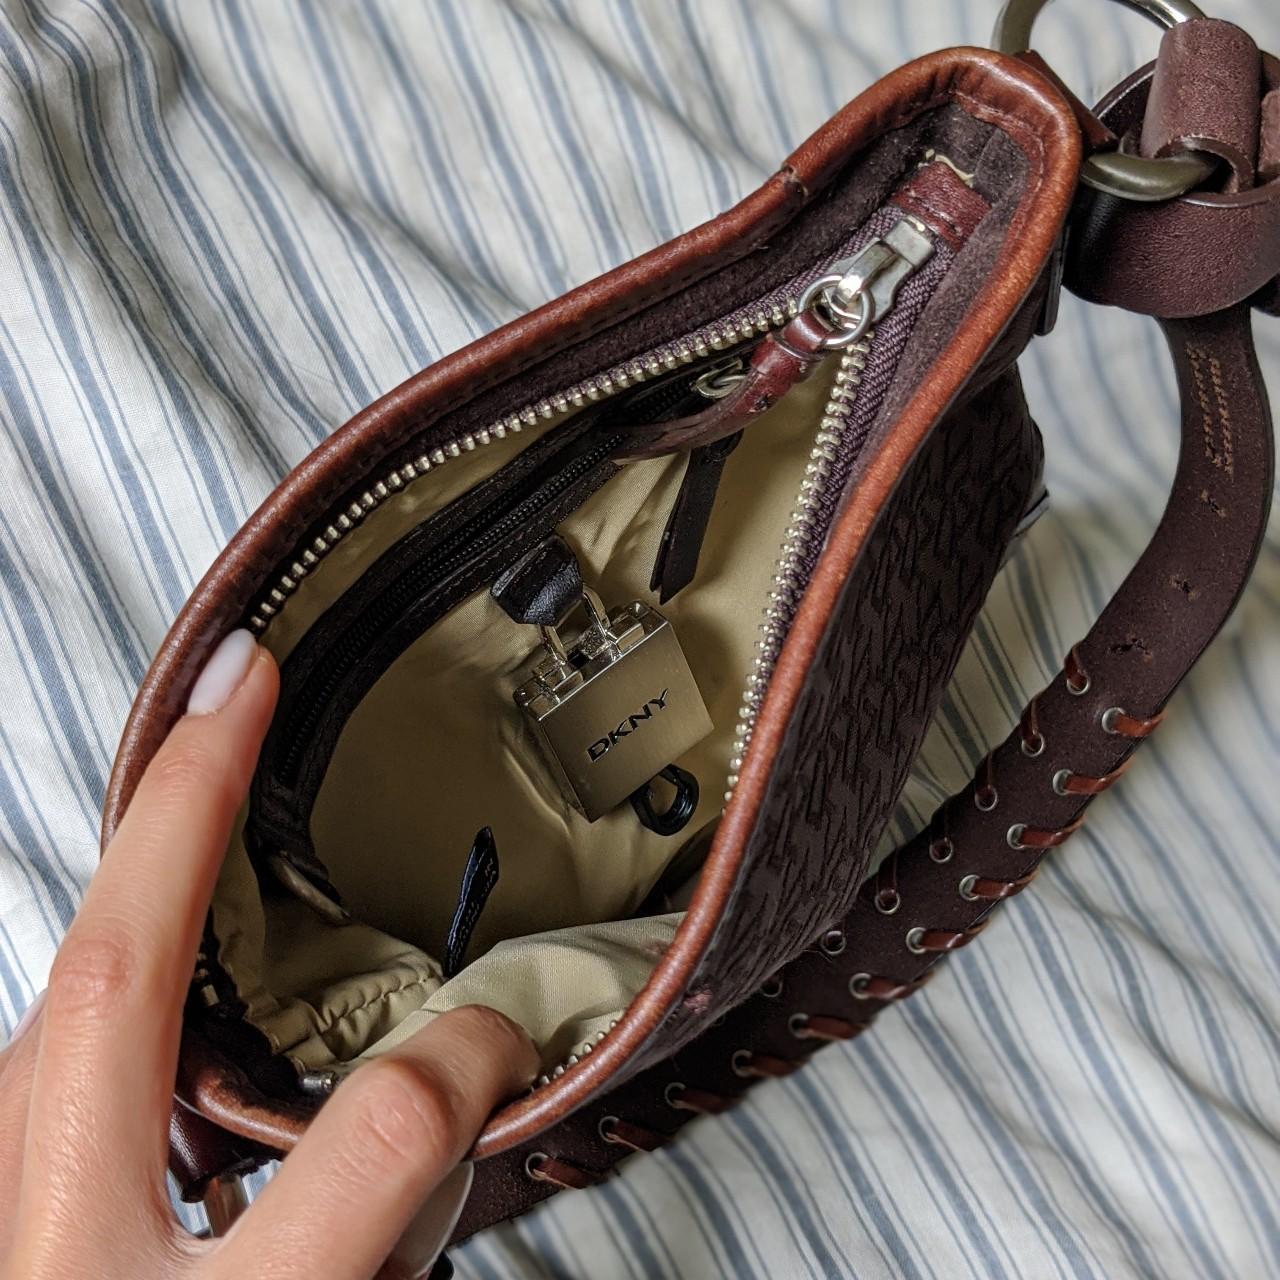 DKNY purse in blush💕 | Dkny bag, Bags, Purses